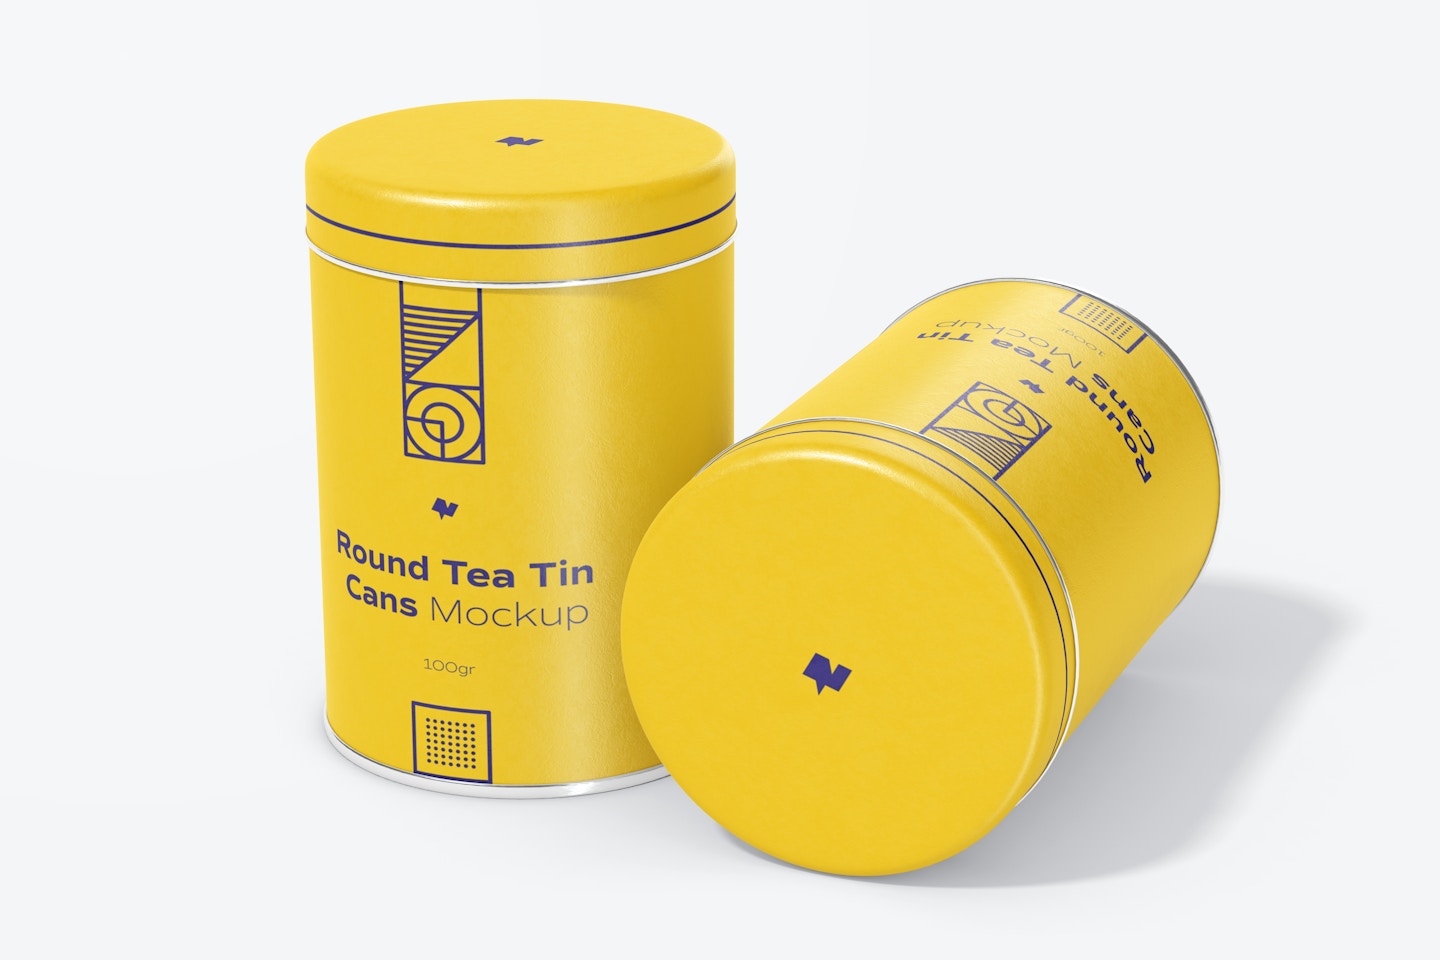 Round Tea Tin Cans Mockup